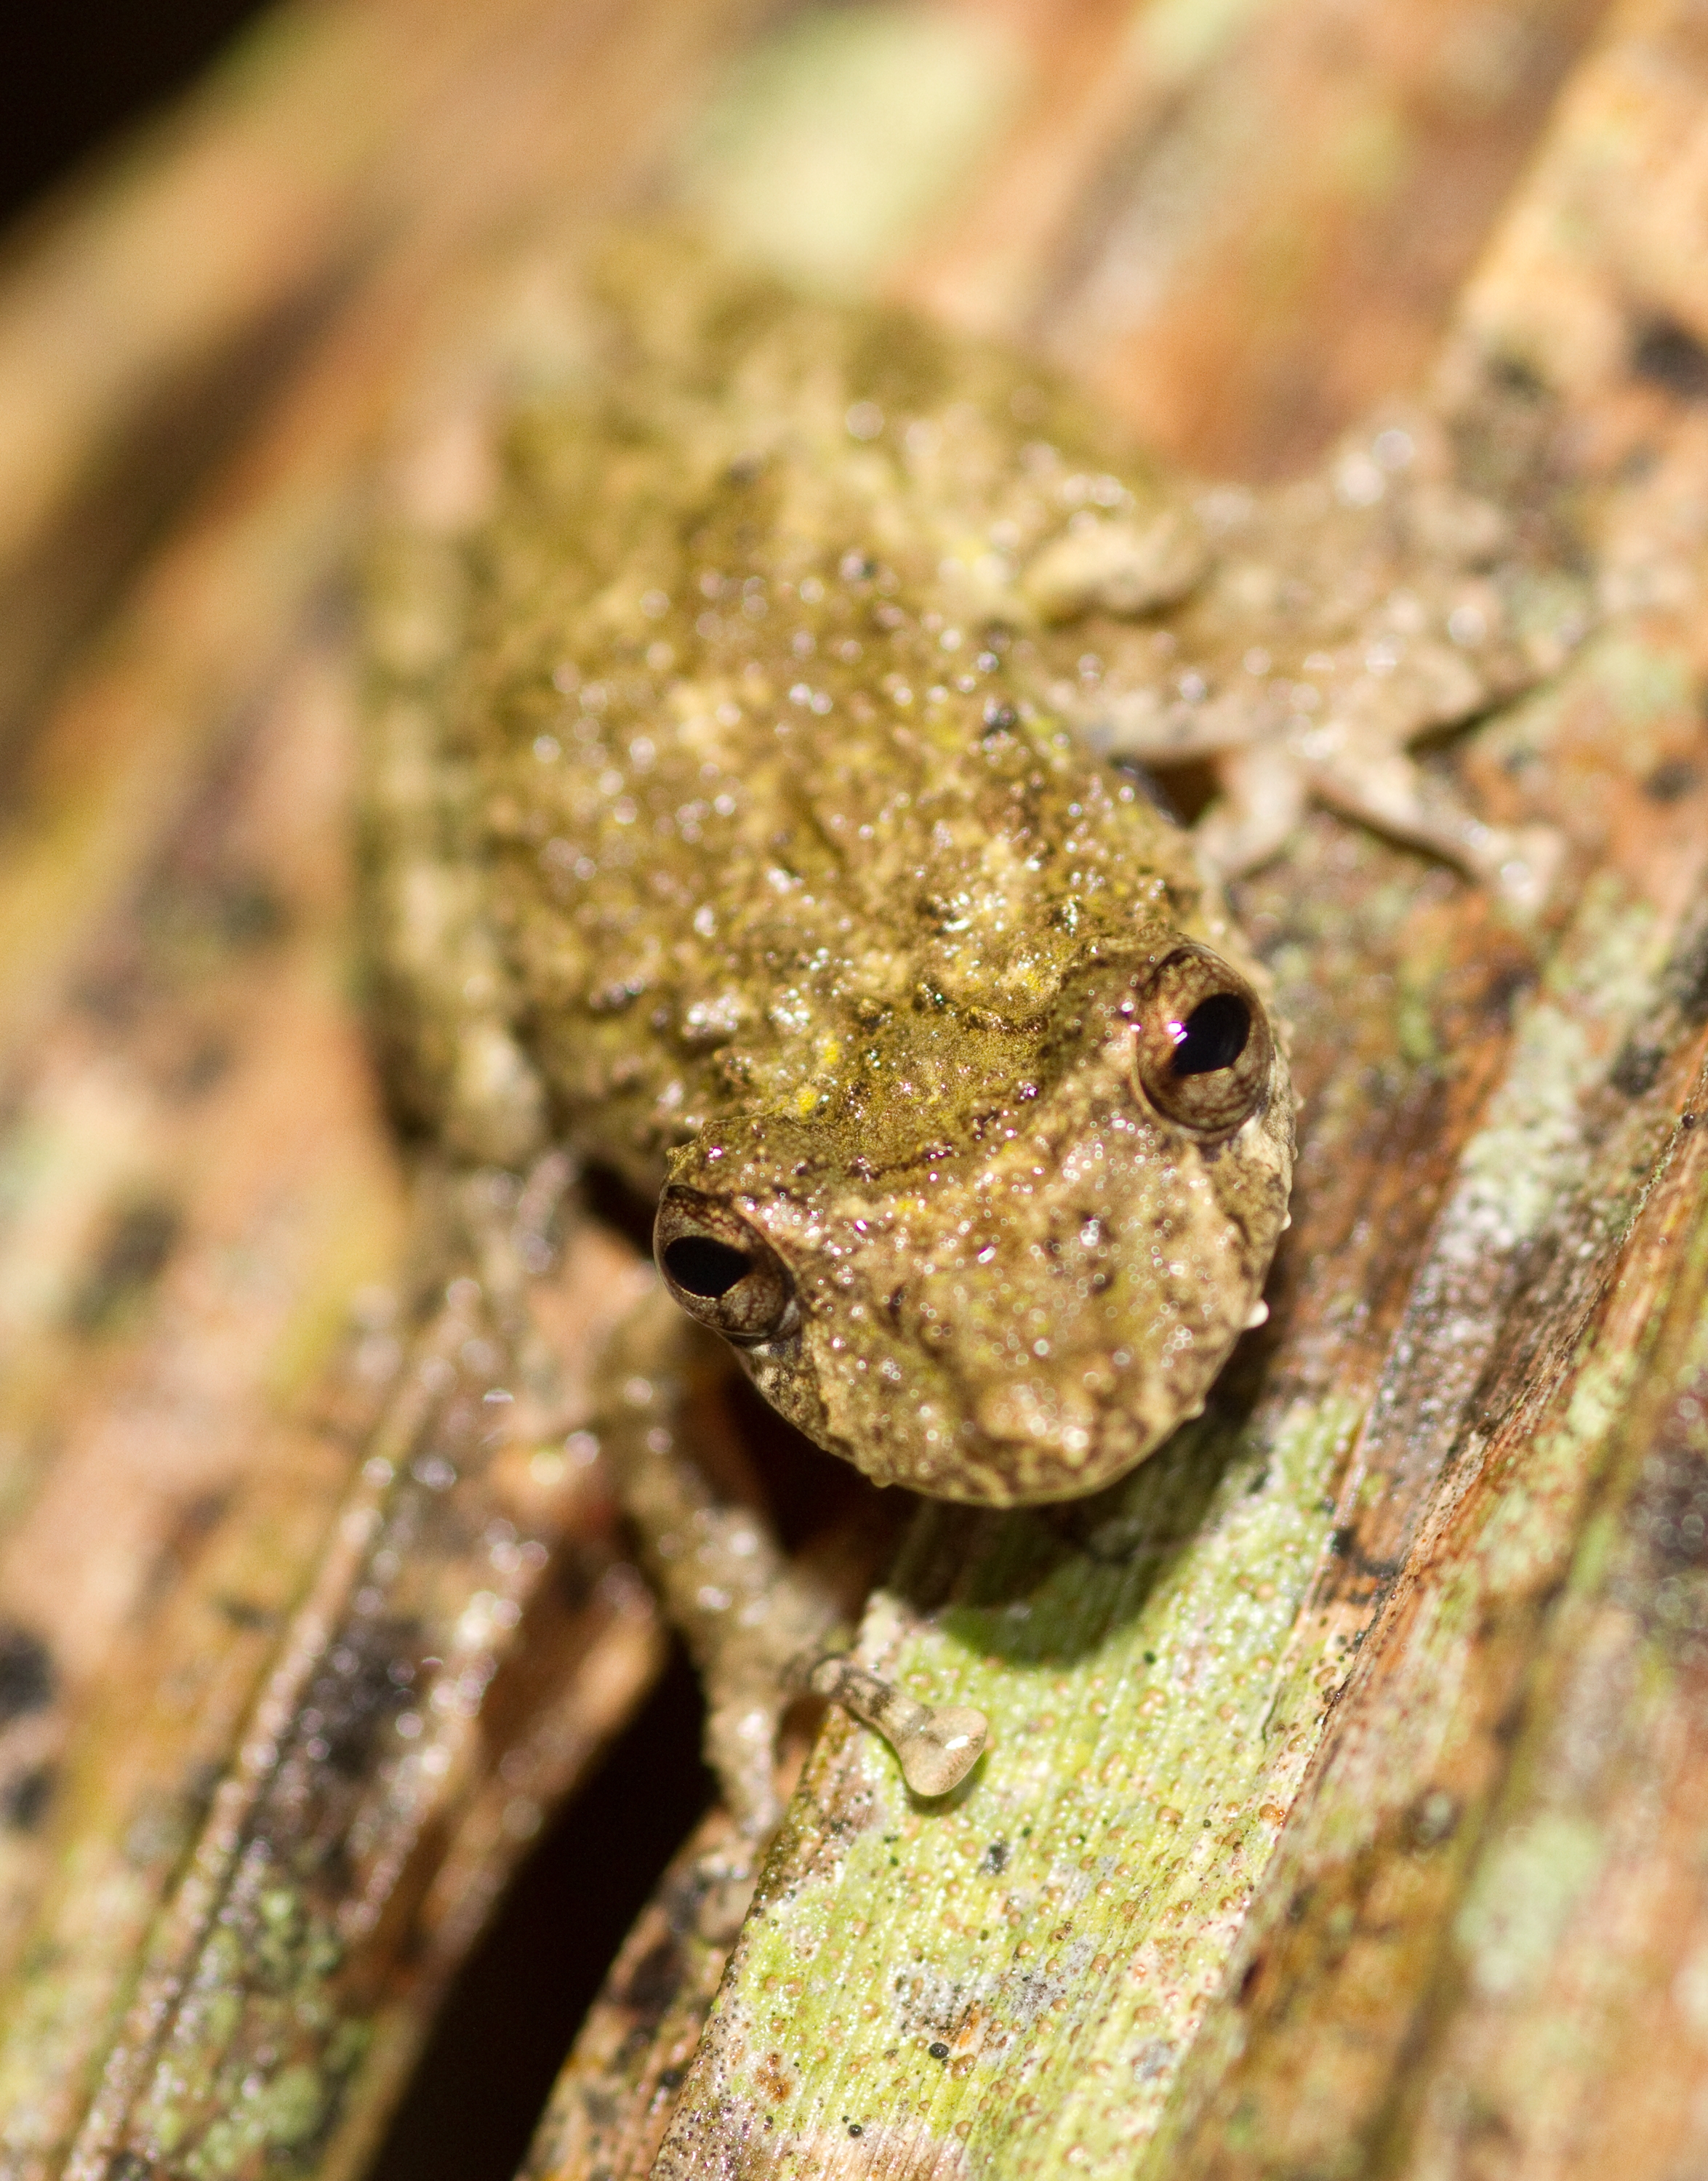 Boulenger's snouted treefrog (Scinax boulengeri)